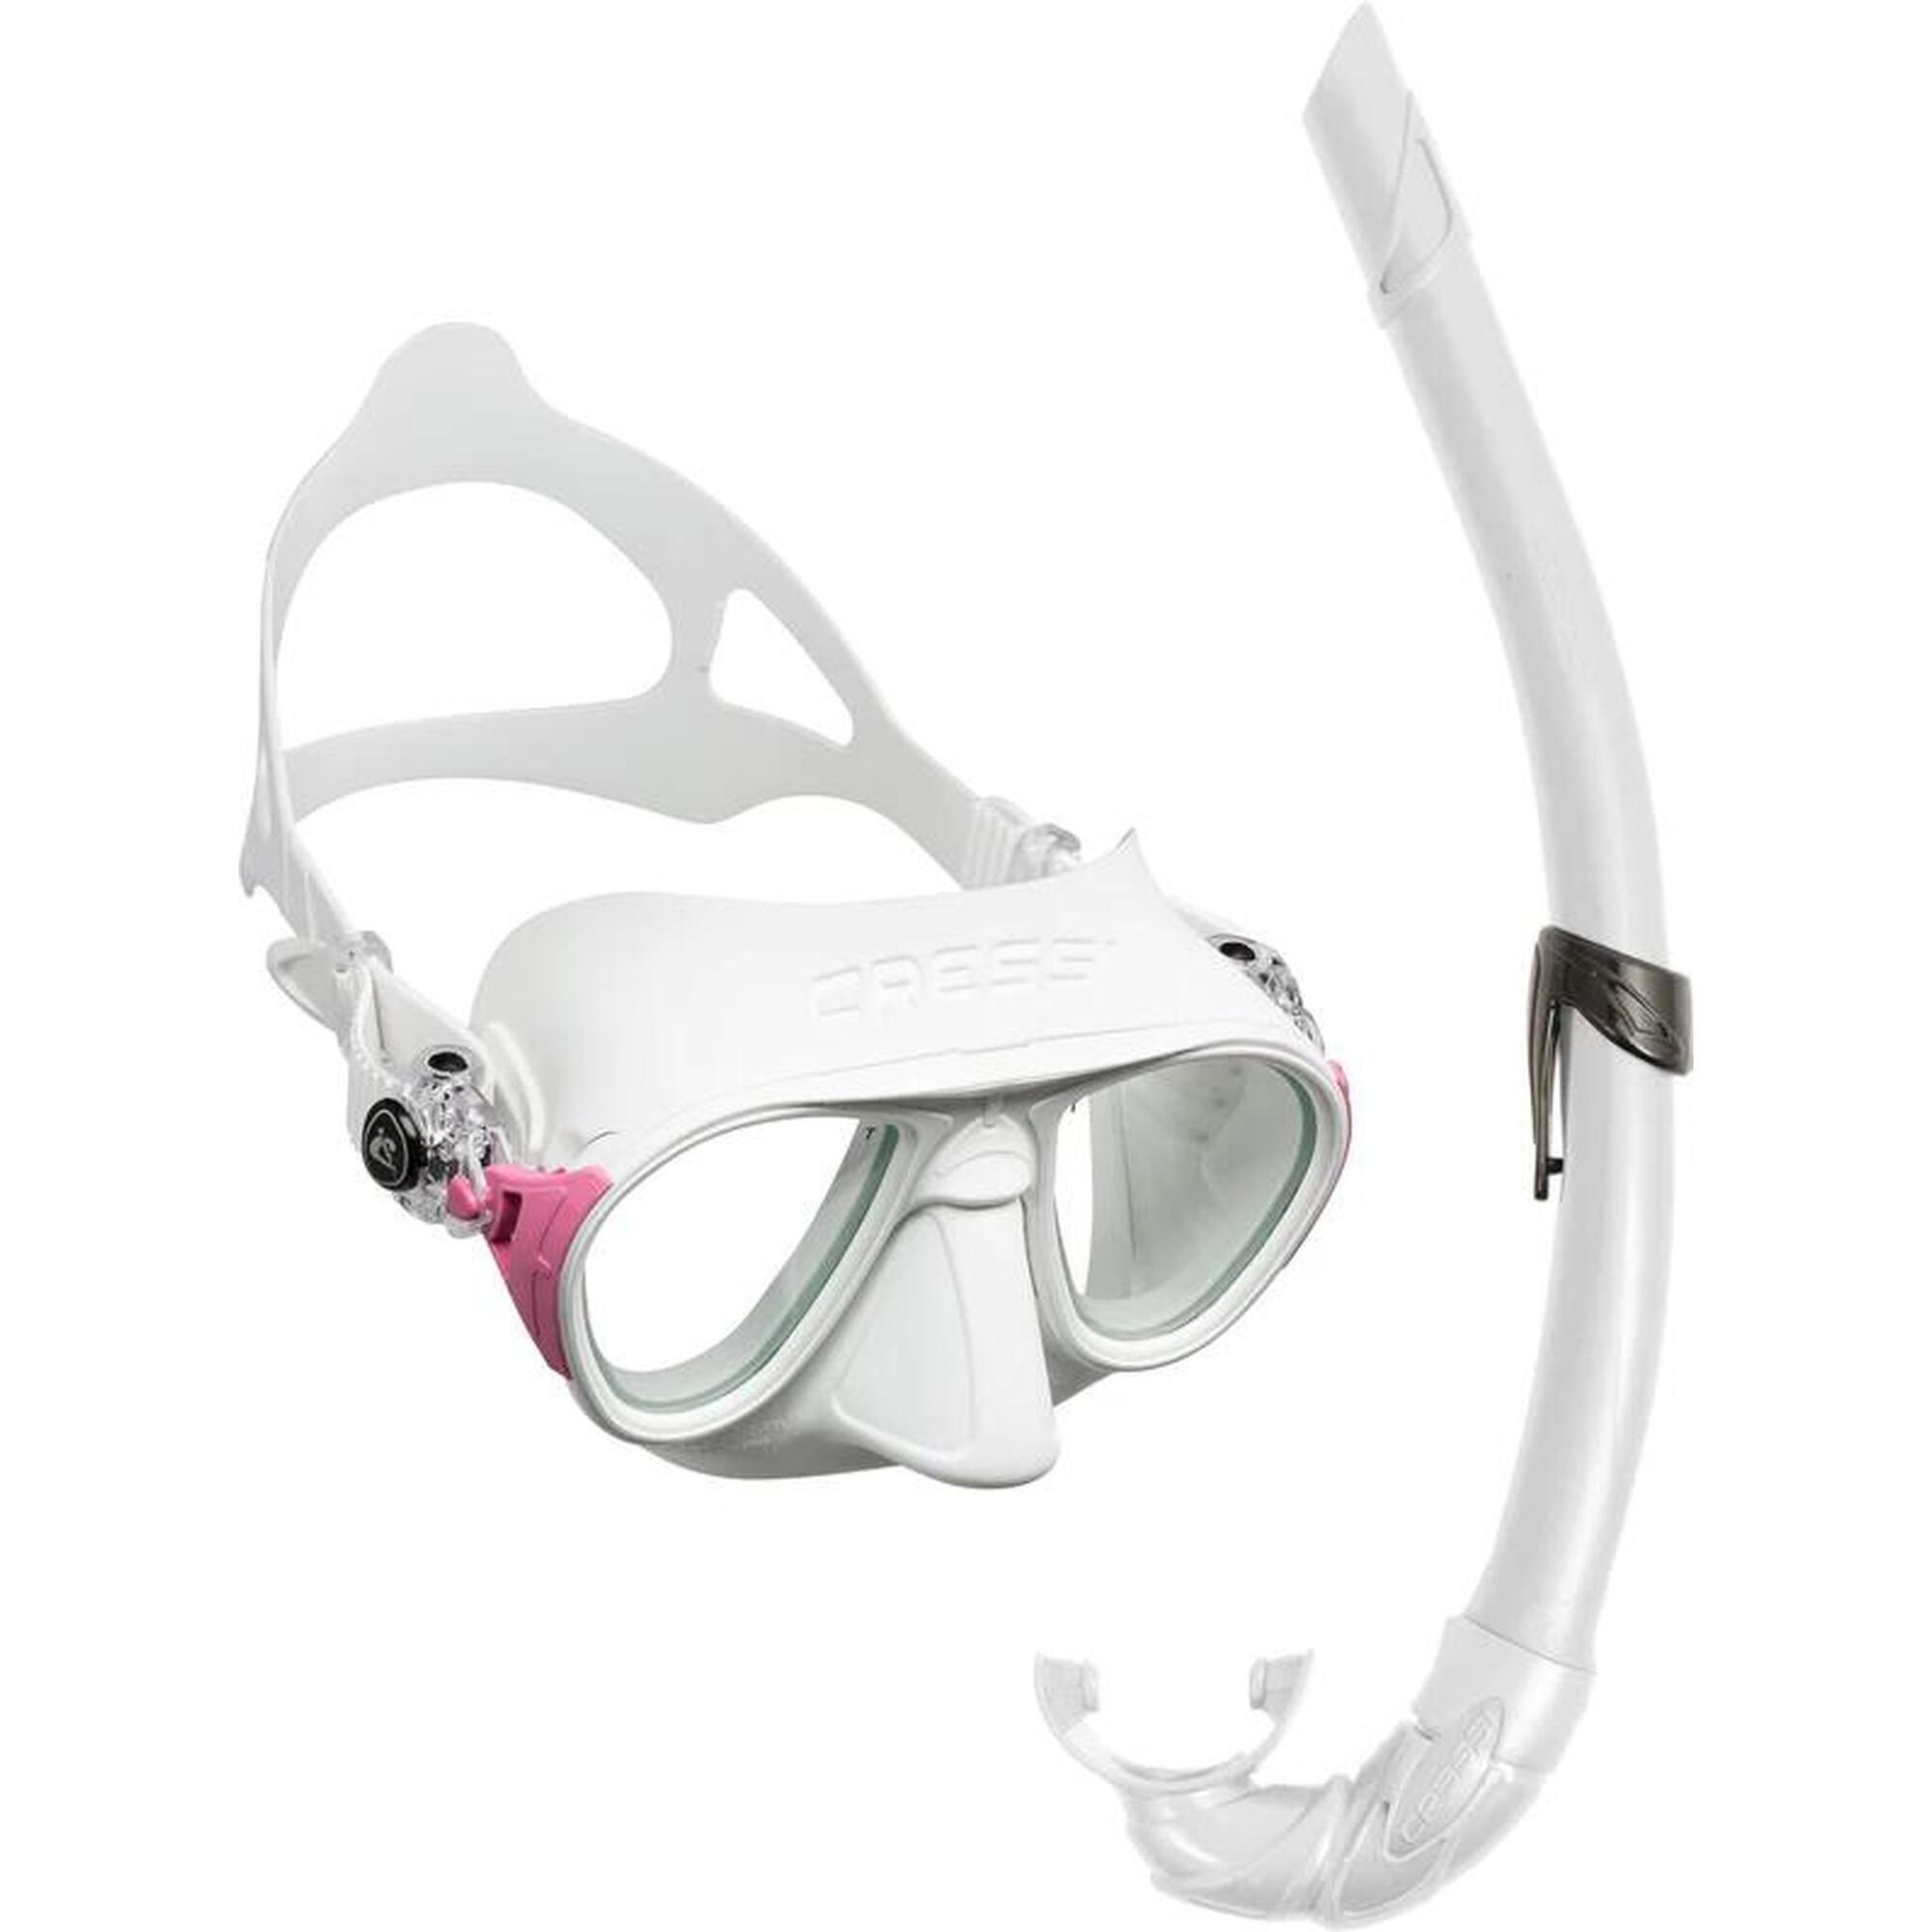 Calibro mask with Corsica snorkel Combo - White